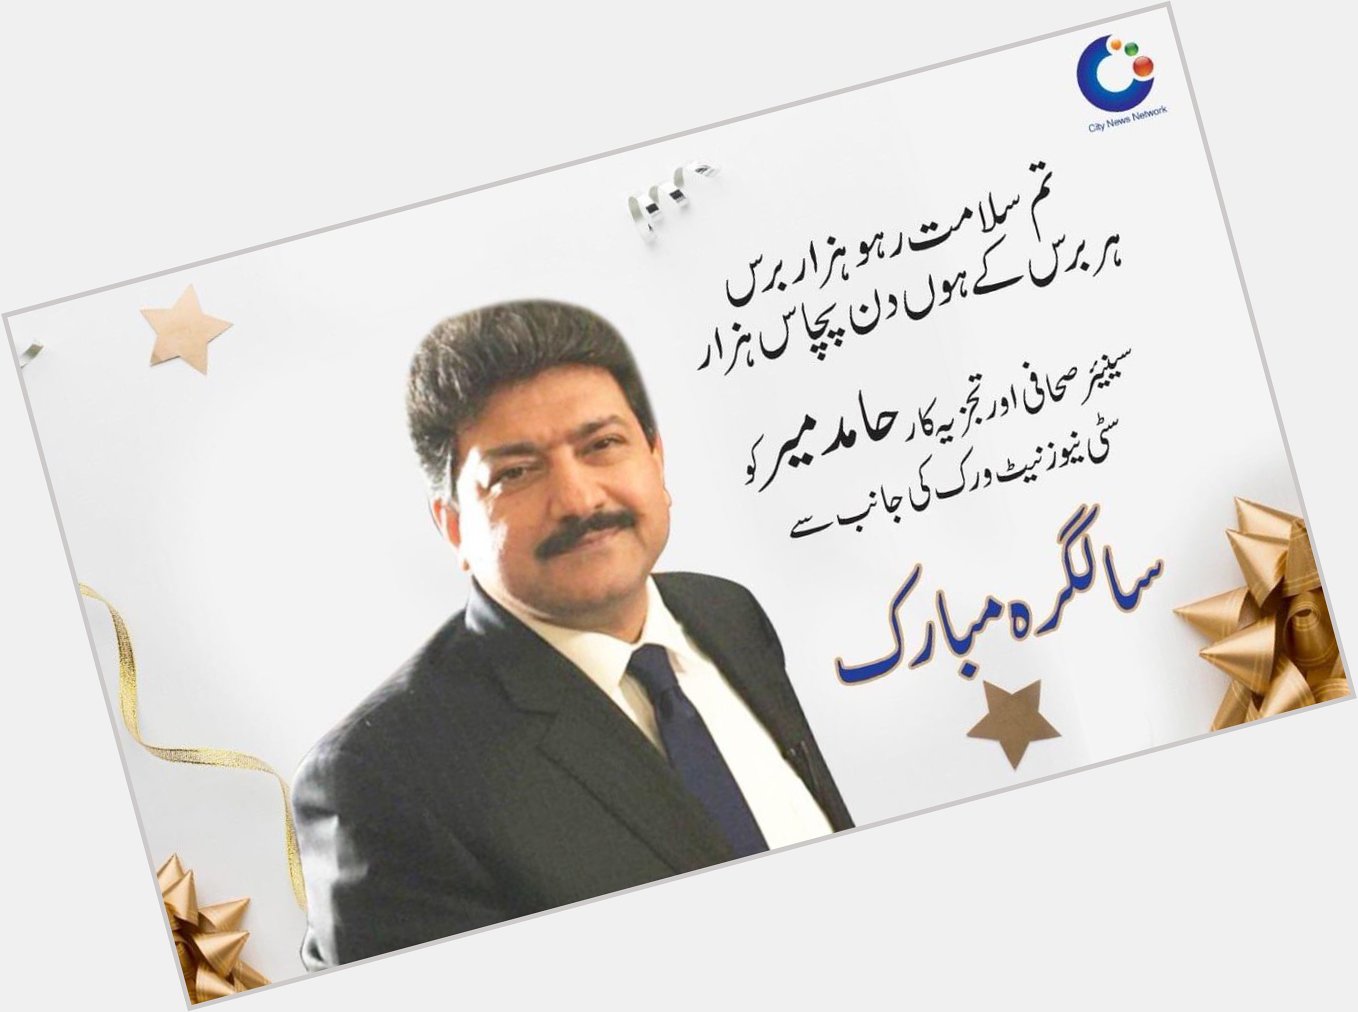 Neshan sahafat Neshan jurat  Wishing A Very Happy Birthday To Senior Journalist Hamid Mir 